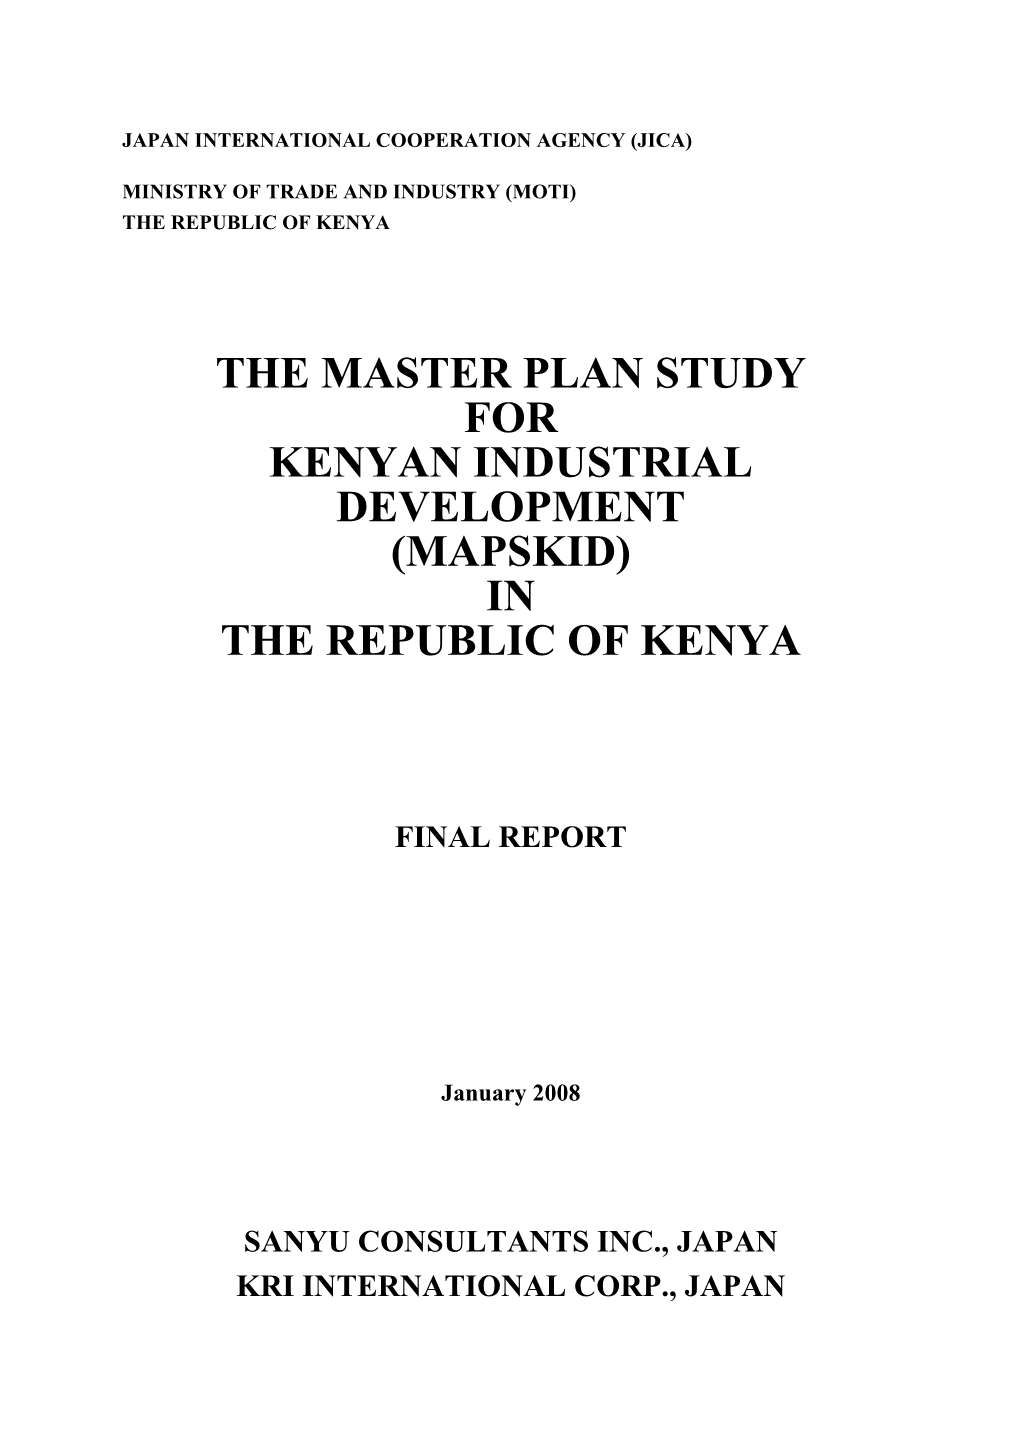 The Master Plan Study for Kenyan Industrial Development (Mapskid) in the Republic of Kenya